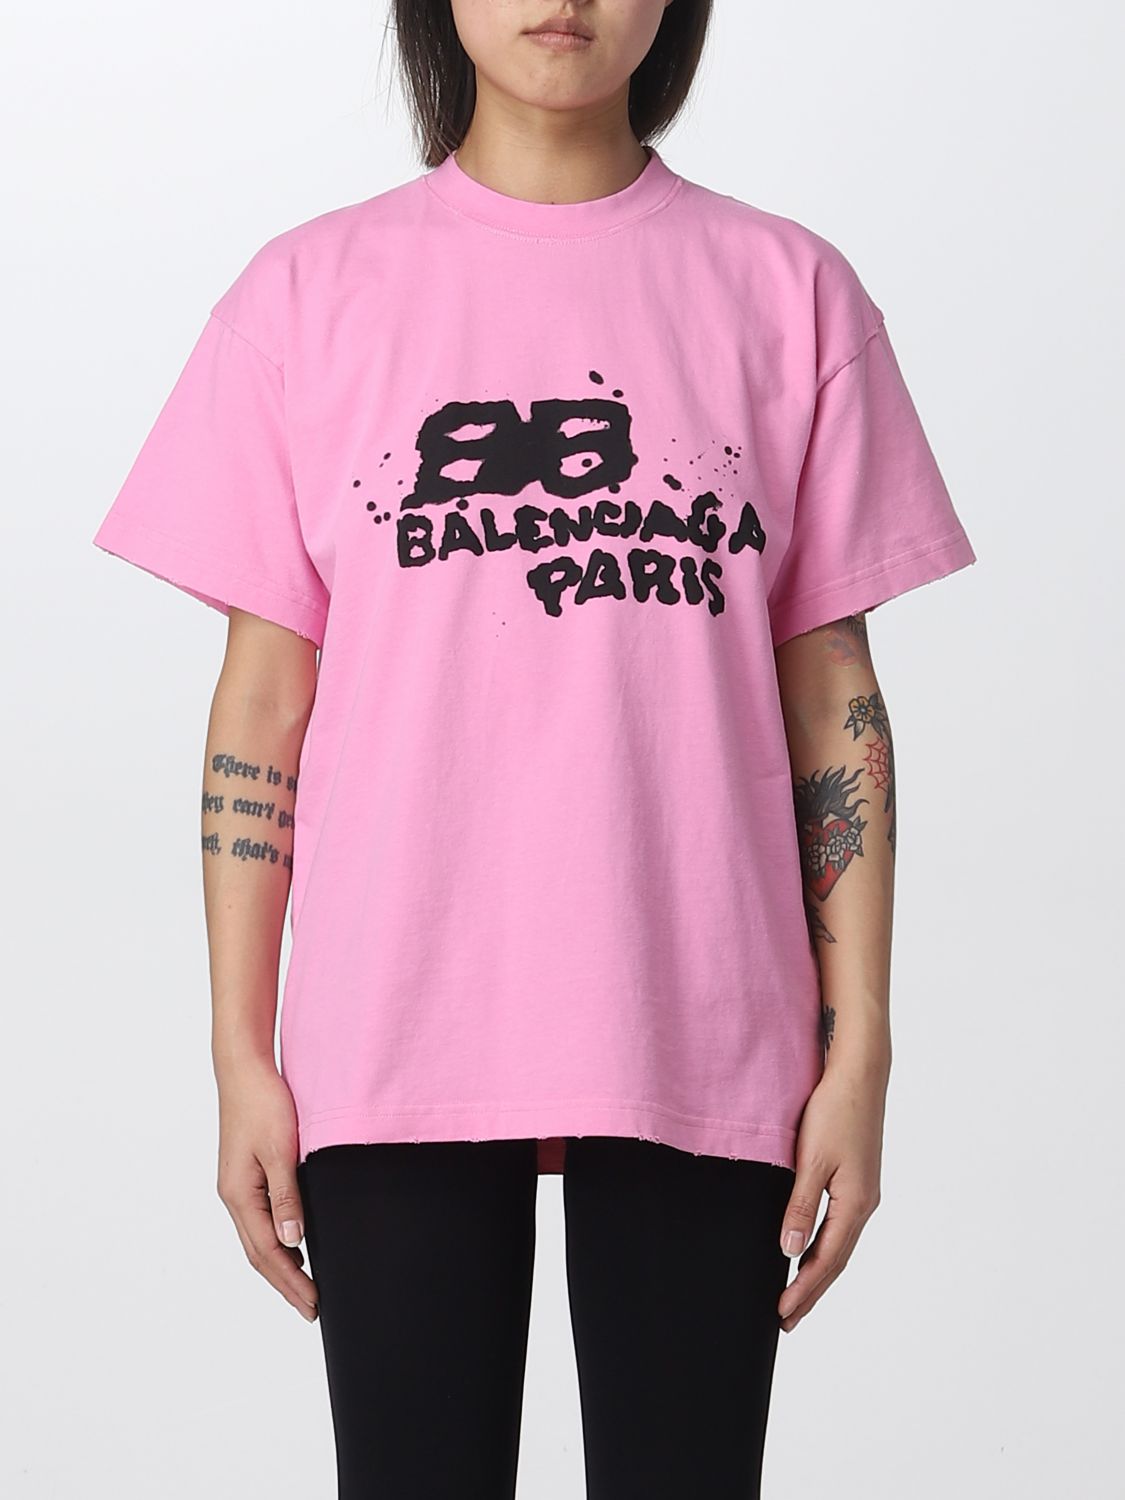 passage Betsy Trotwood kasteel BALENCIAGA: t-shirt with contrasting graffiti logo - Pink | Balenciaga t- shirt 612965TNVN4 online on GIGLIO.COM